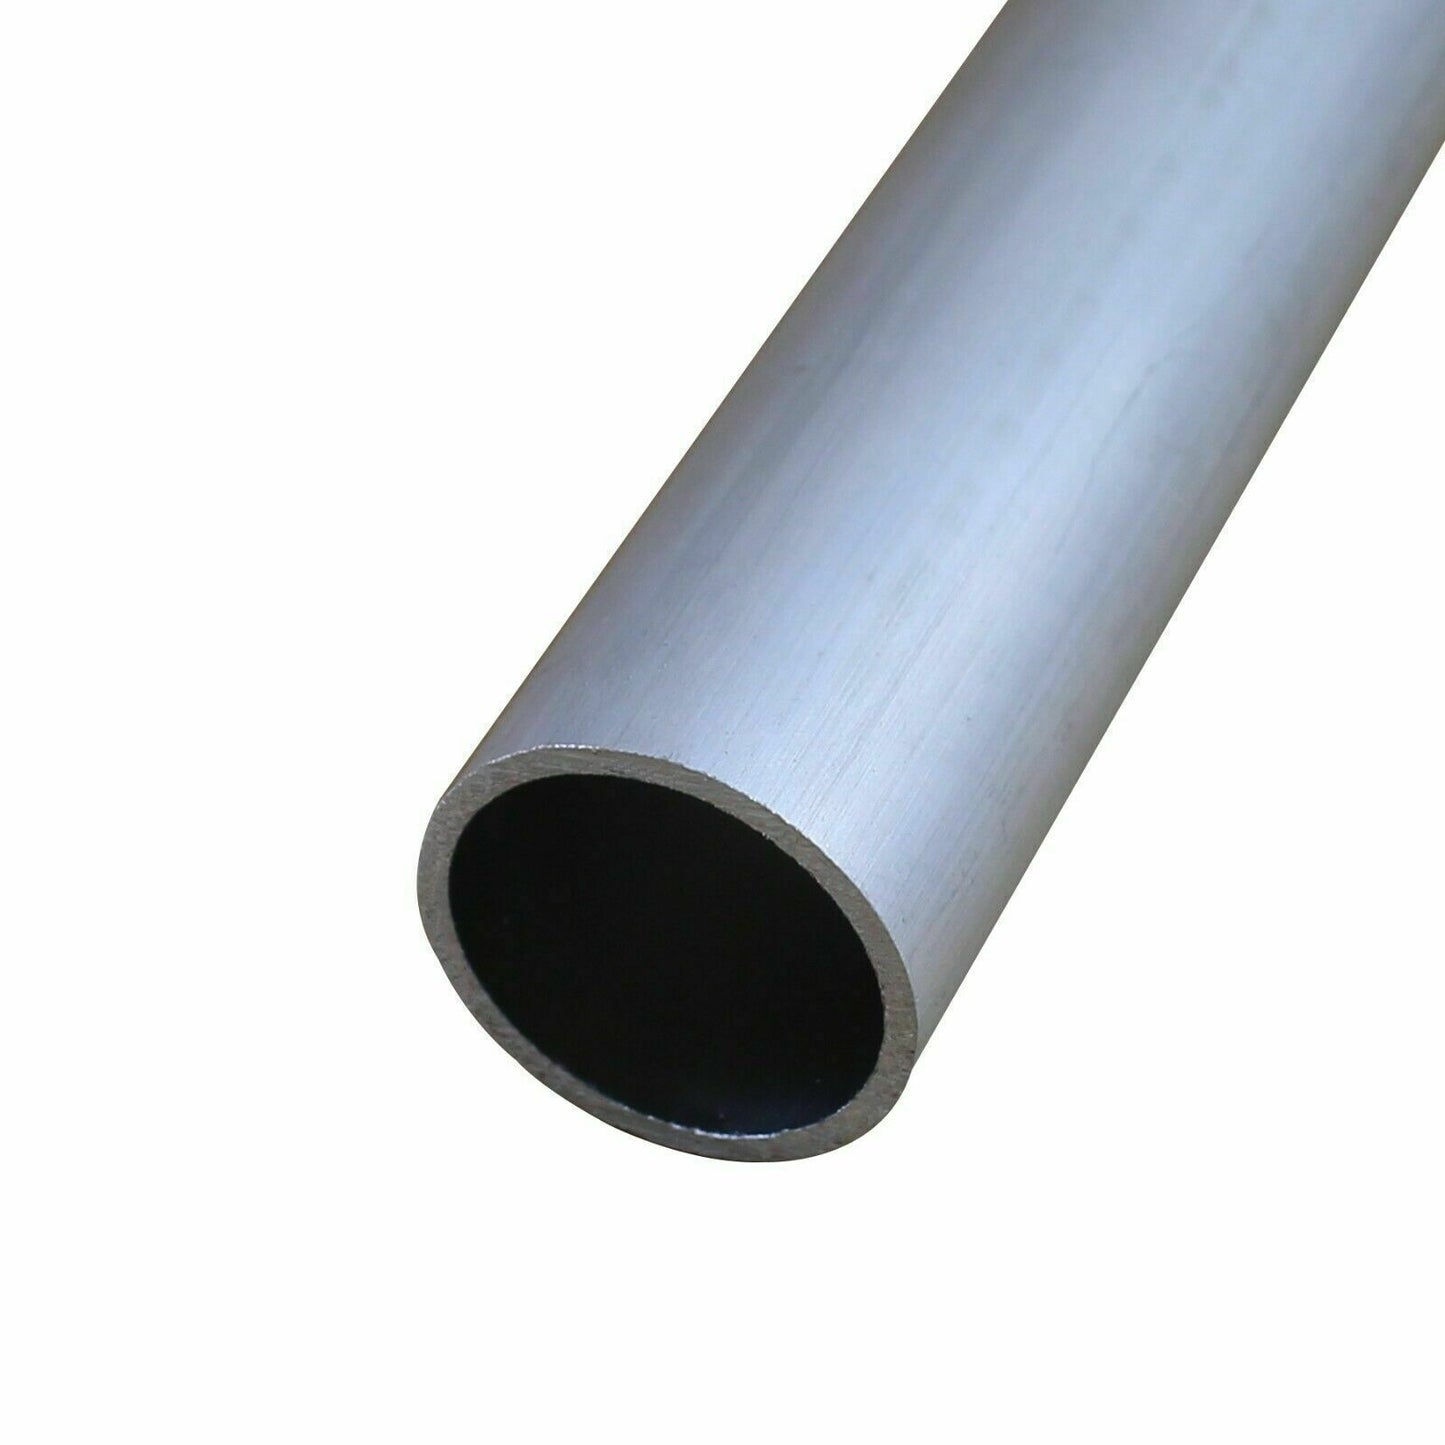 OD 30 mm ID 24 mm 1 pièce Tube rond en aluminium